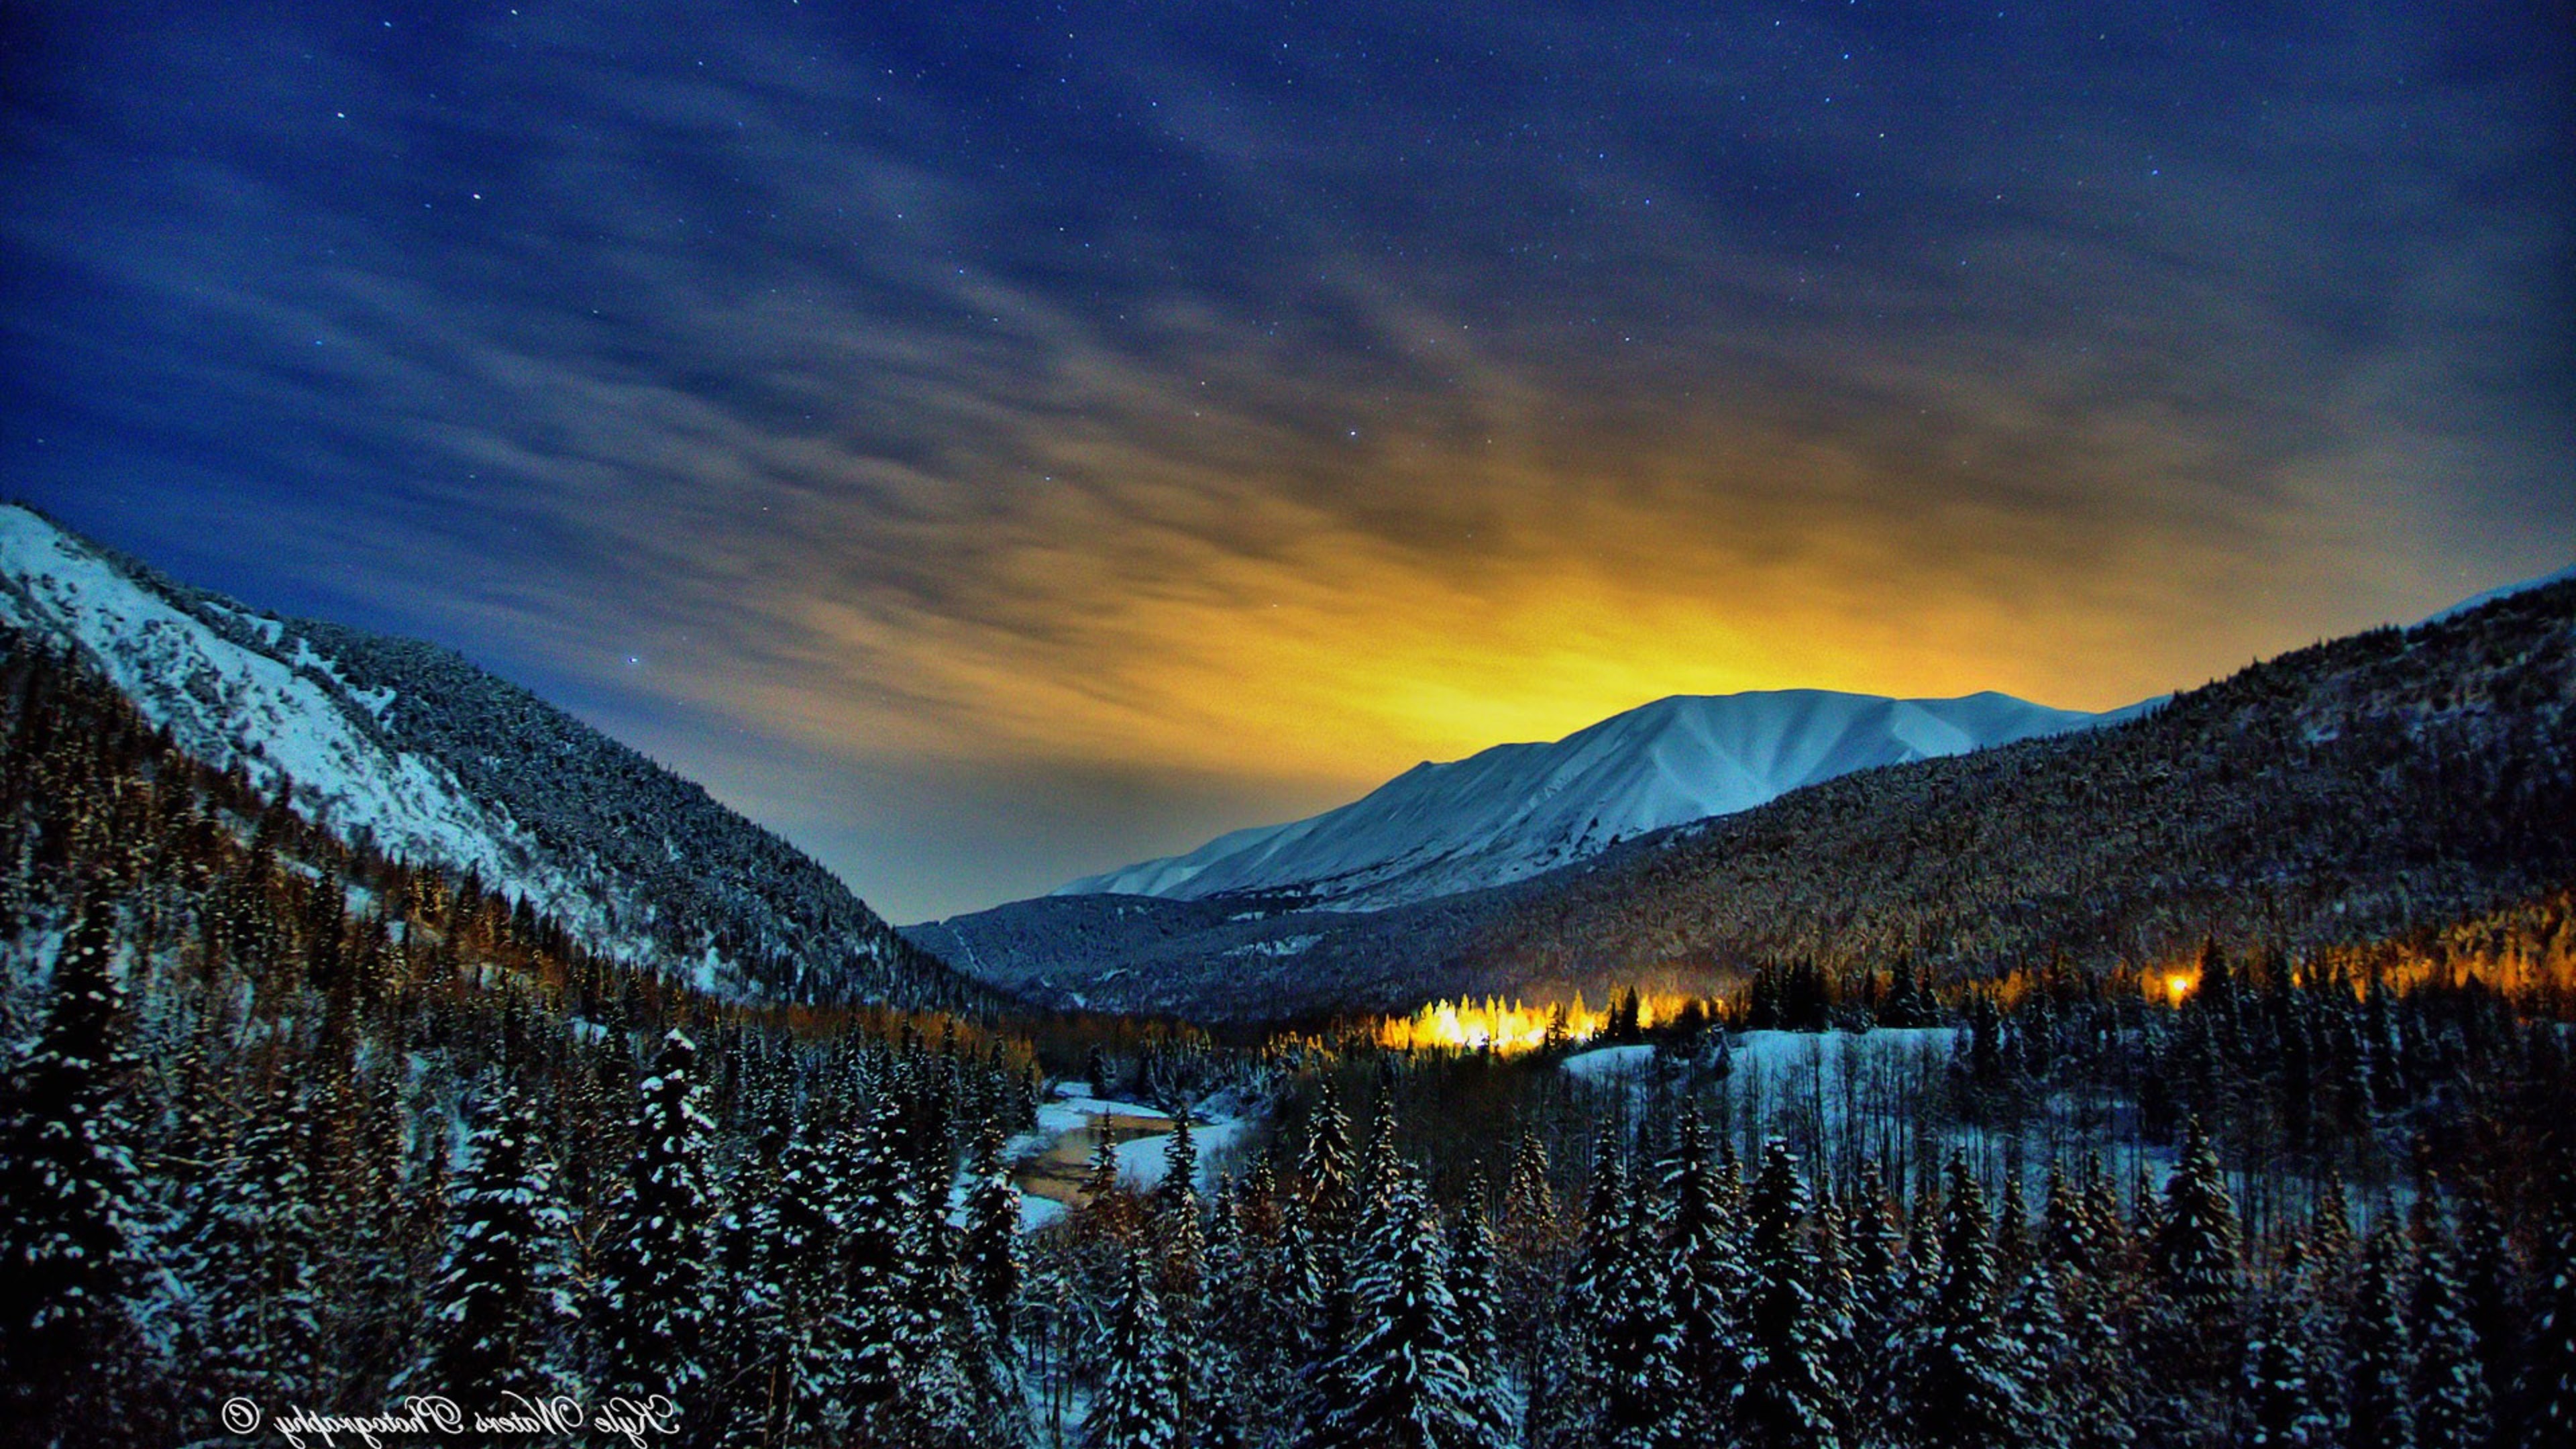 Alaska Winter Nights, HD Nature, 4k Wallpaper, Image